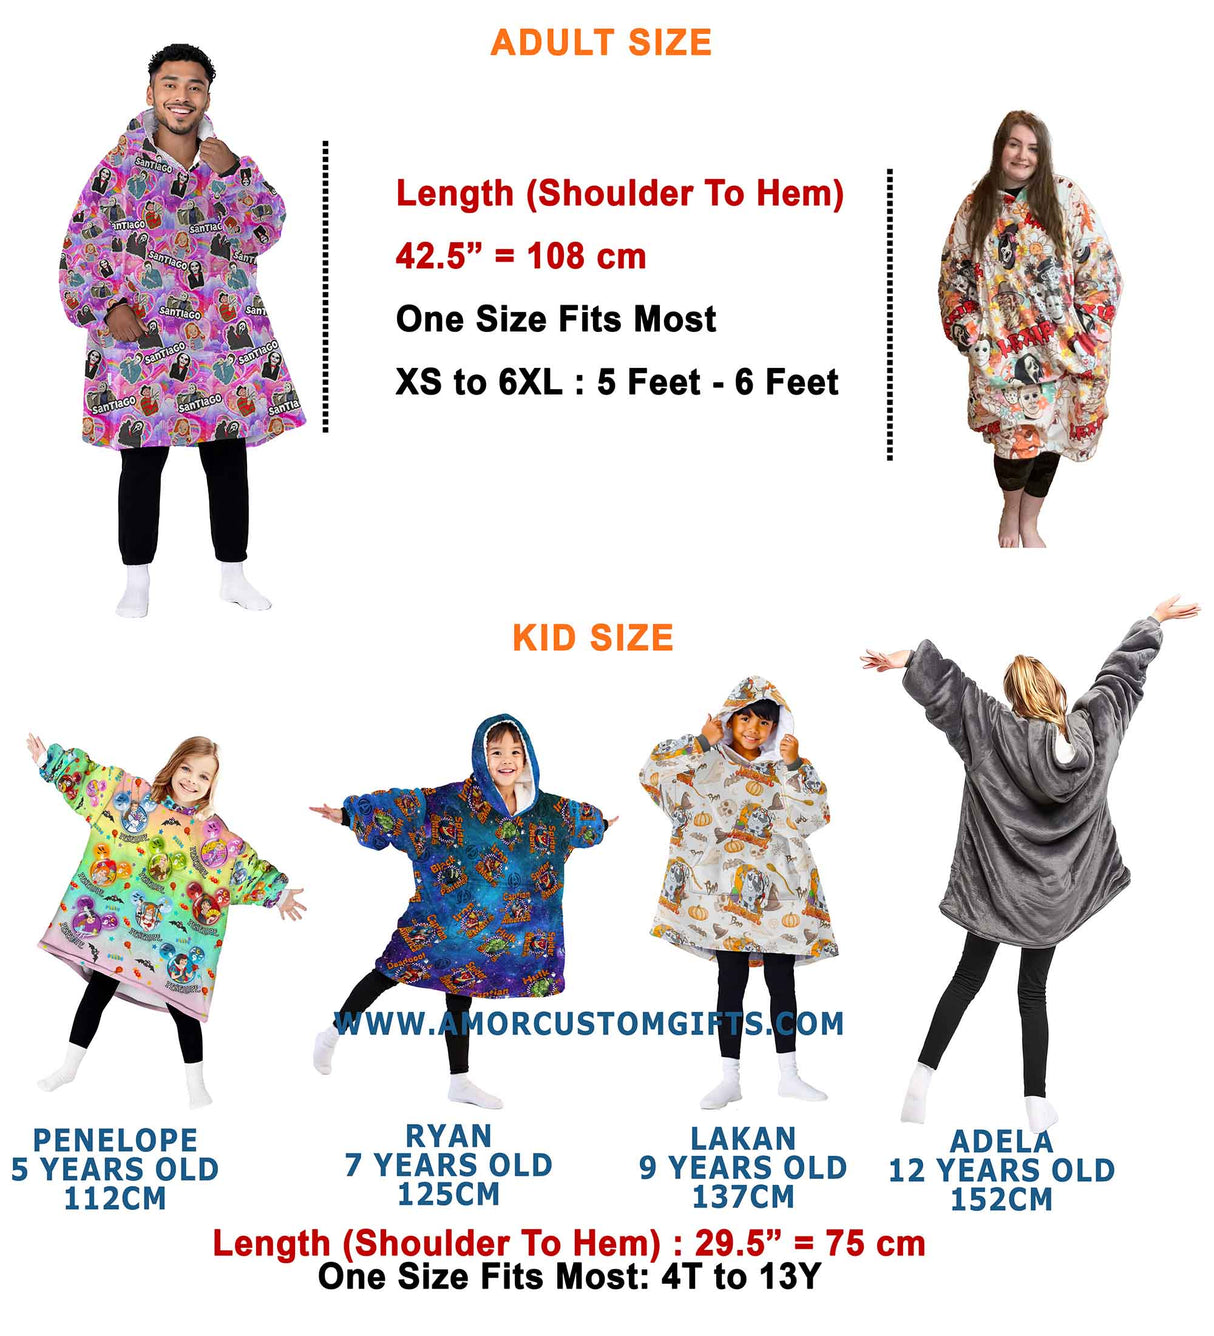 Personalized Snug Oversized Sherpa Wearable Neon Retro Ghost Hoodie Blanket